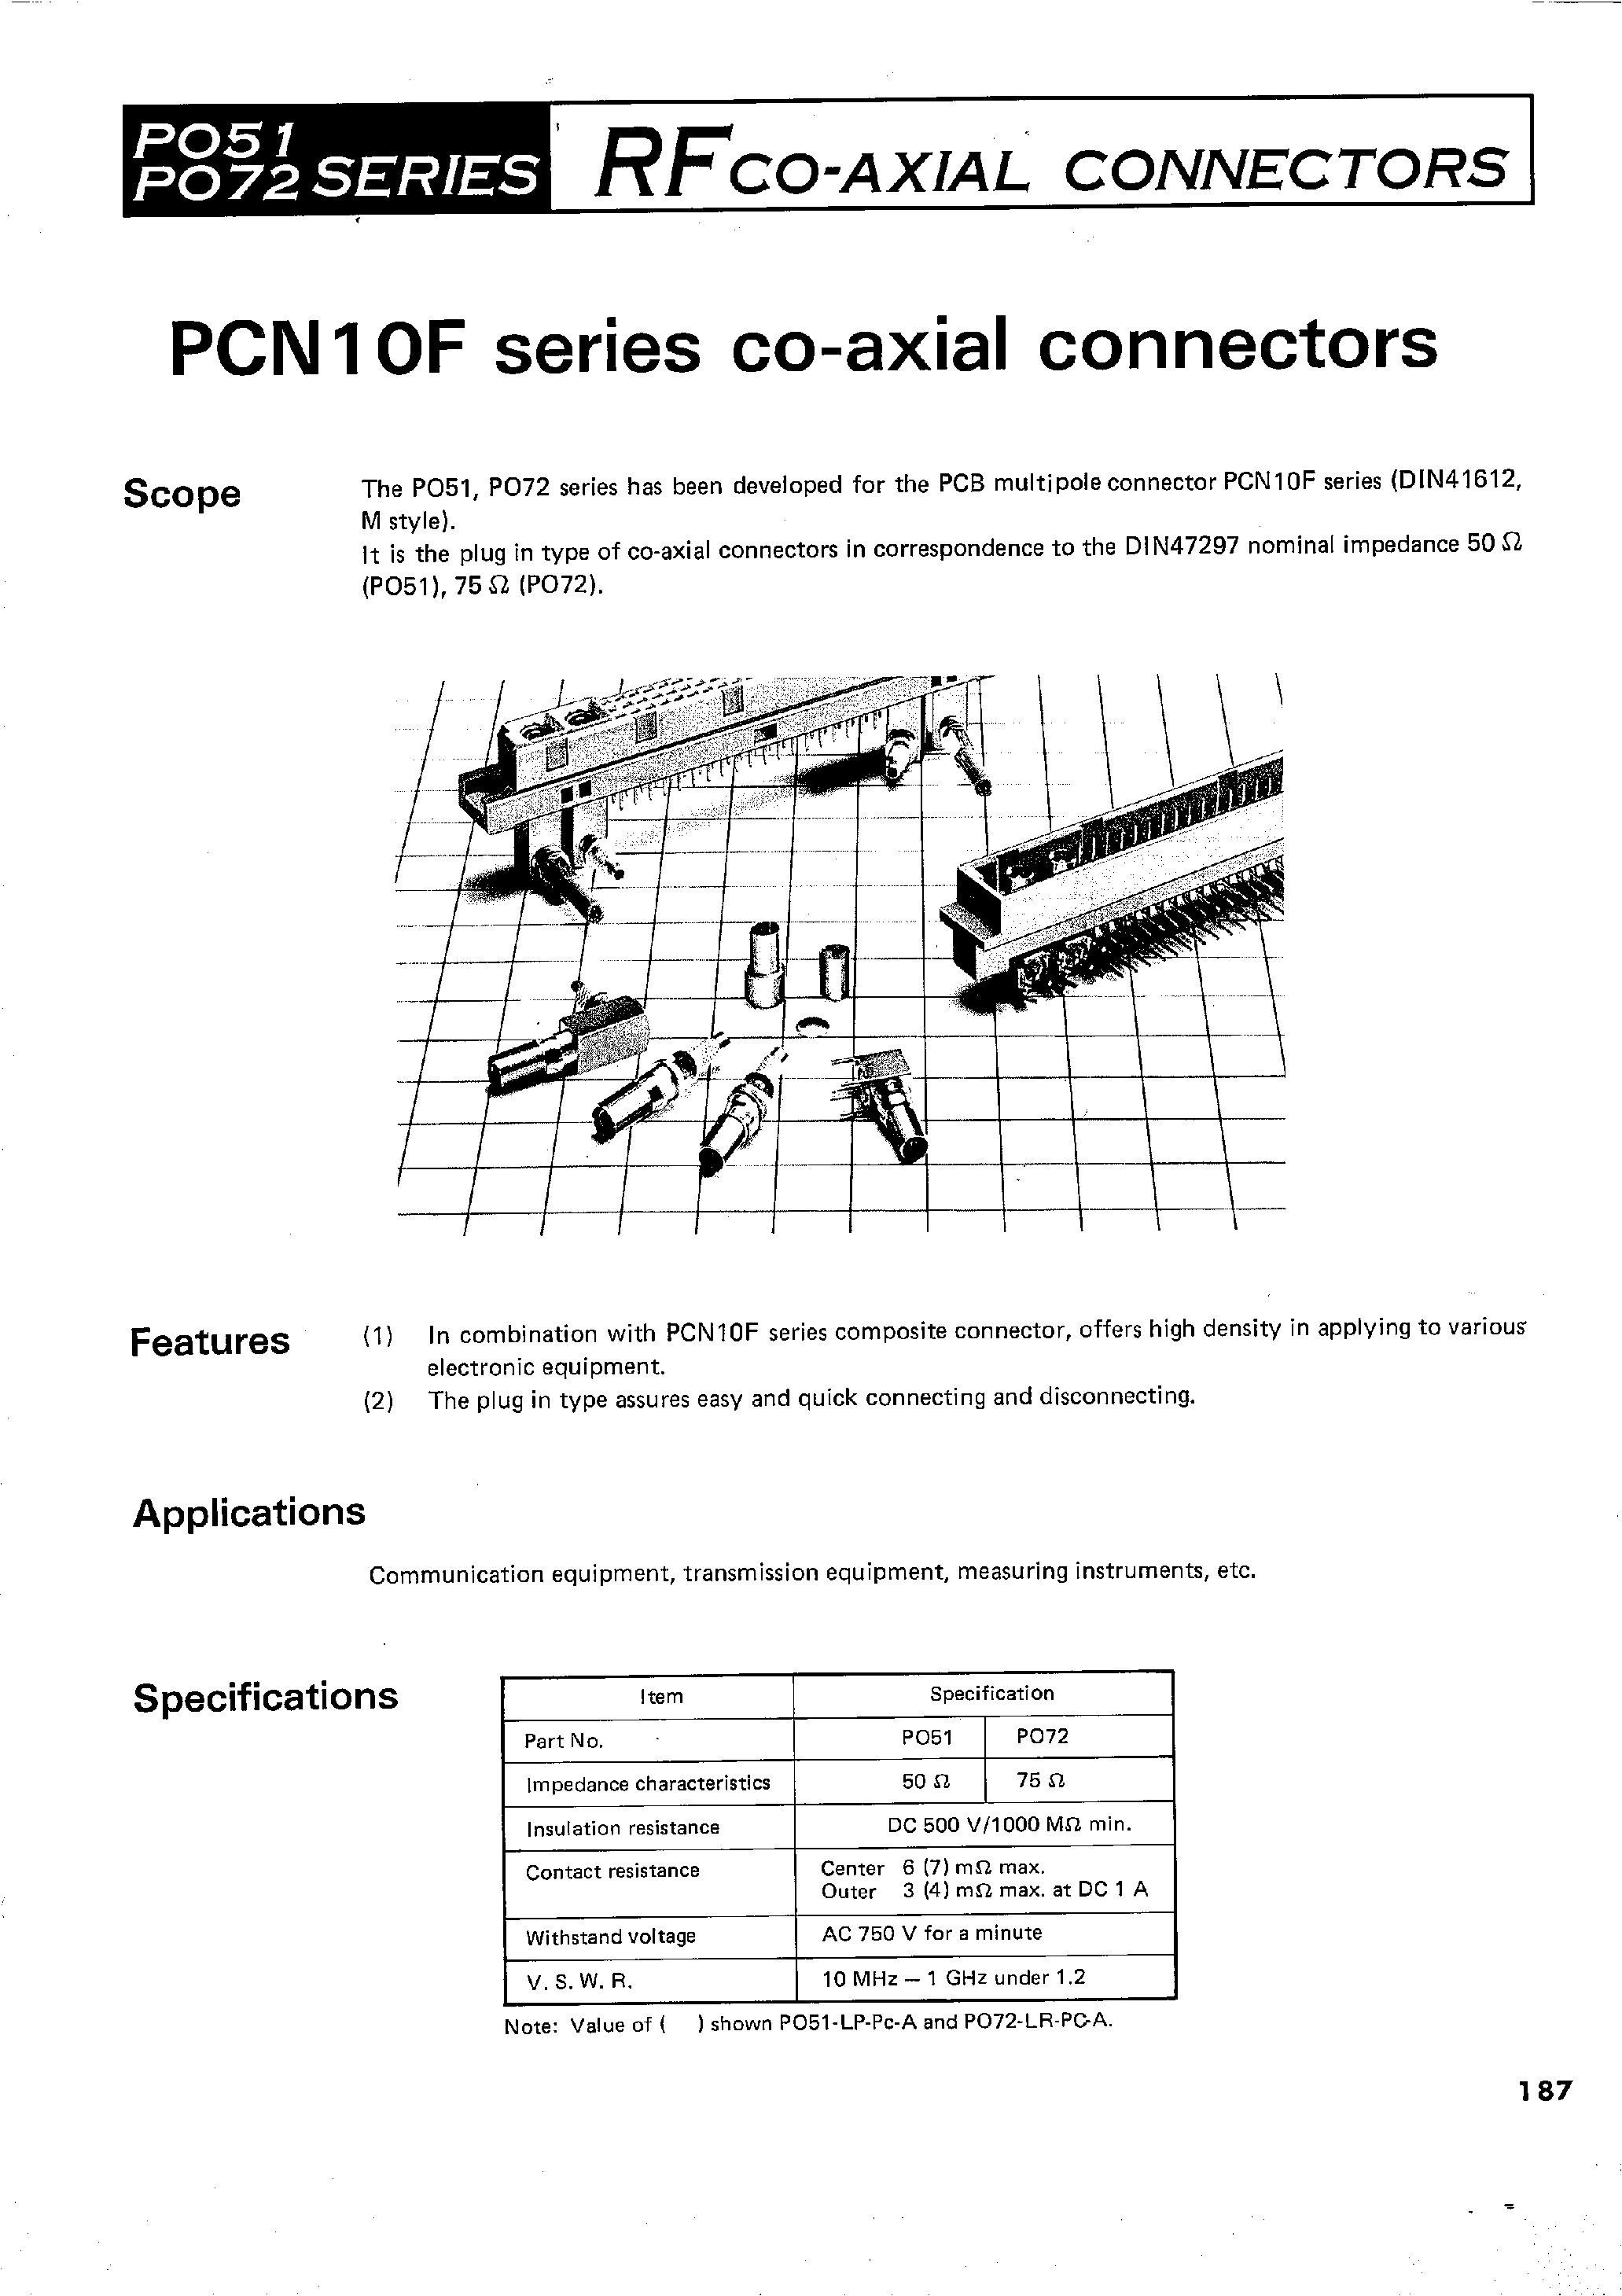 Datasheet PO72-J-1.5C - RFCO-AXIAL CONNECTORS page 1